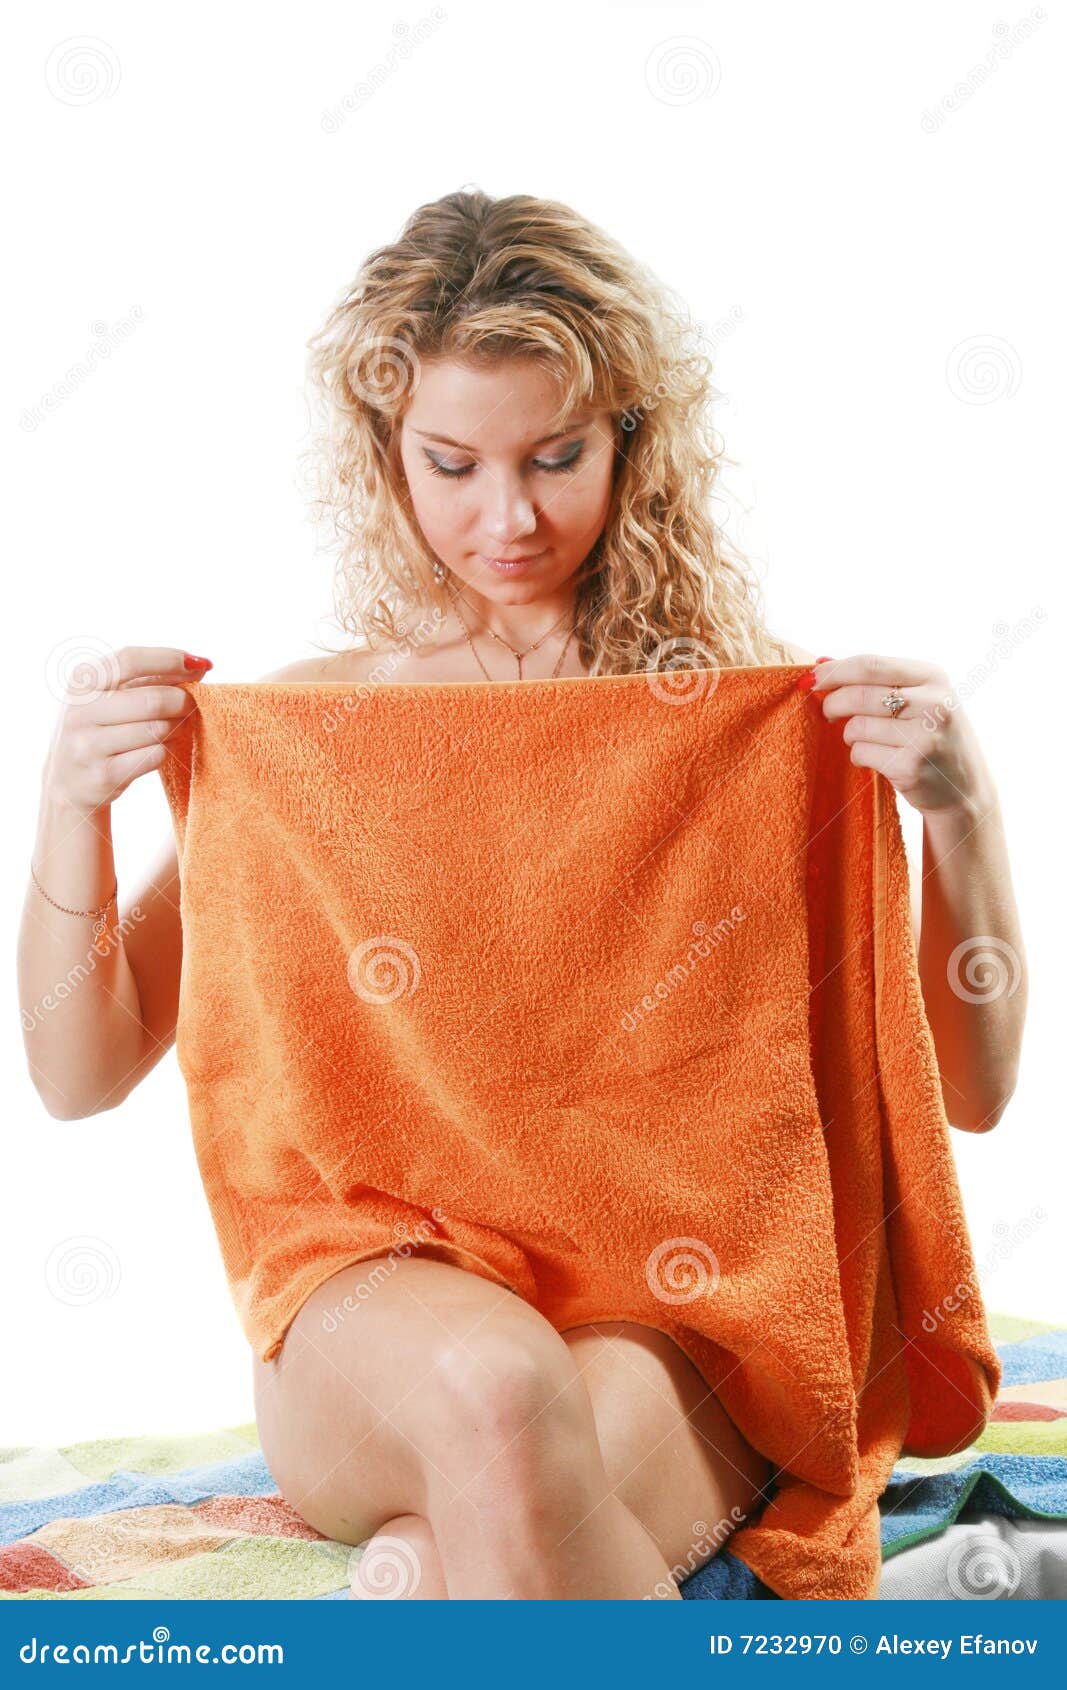 Упало полотенце перед. Девушка в полотенце. Юная девушка в полотенце. Женщина в одном полотенце. Молодые девушки в полотенце.